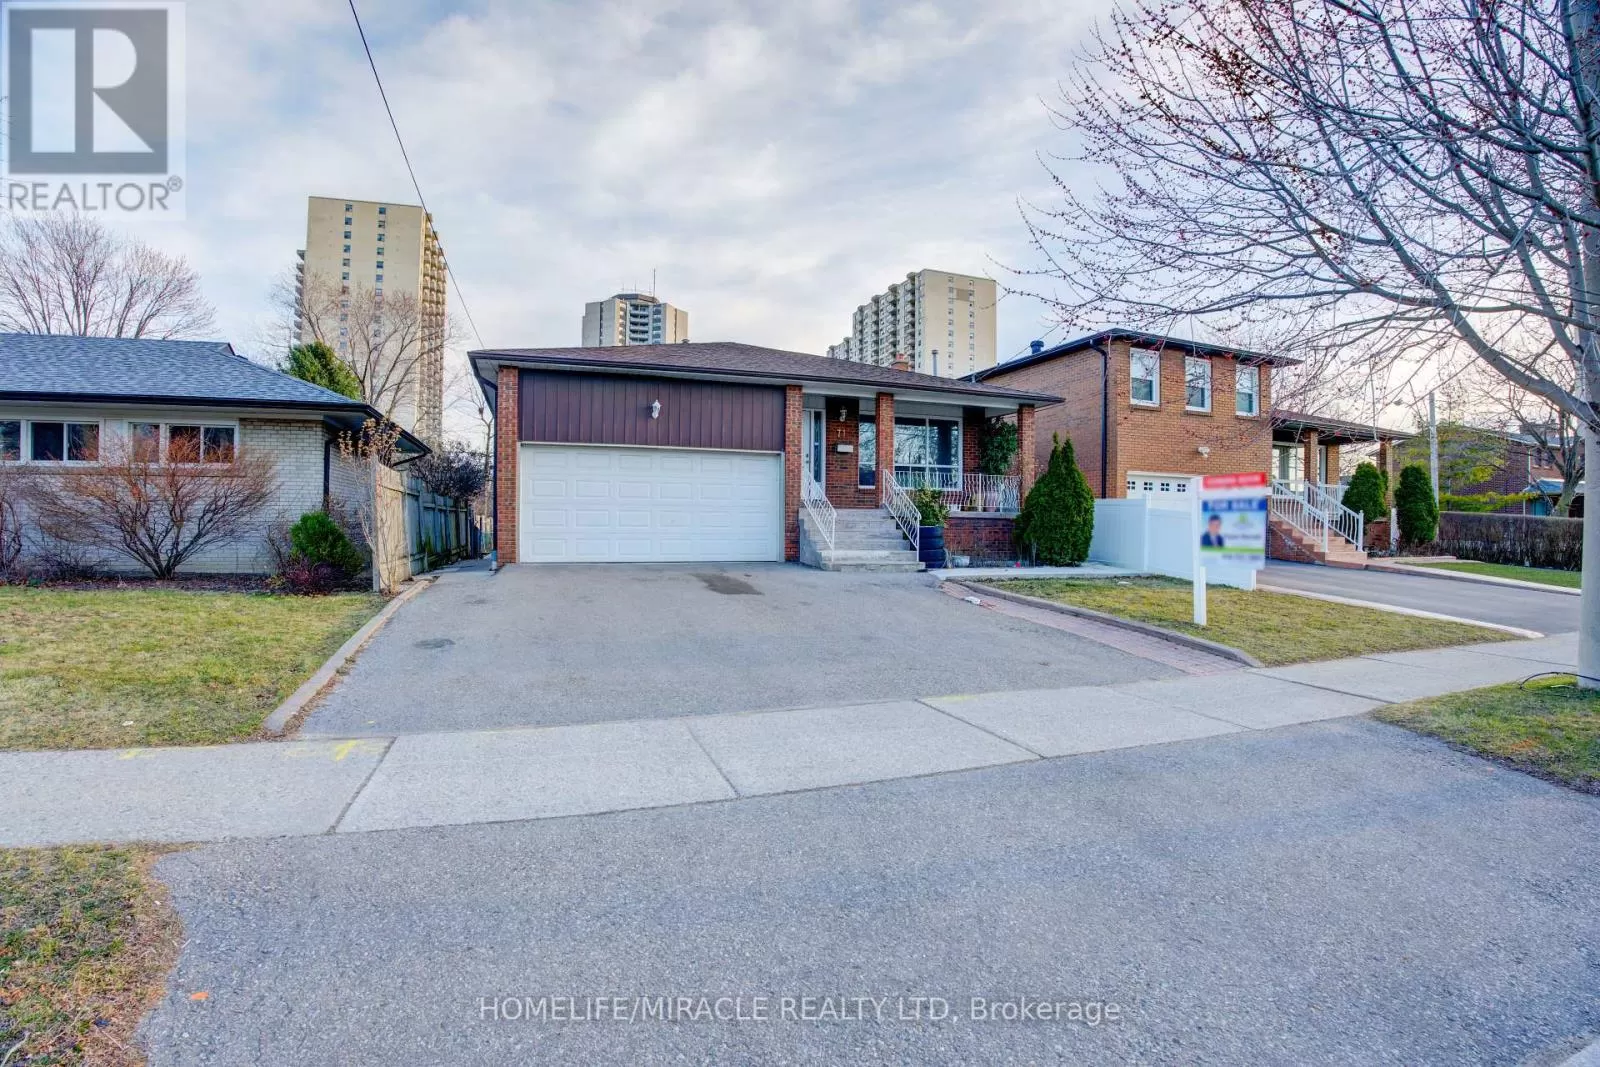 House for rent: 71 Kingsview Boulevard, Toronto, Ontario M9R 1V1